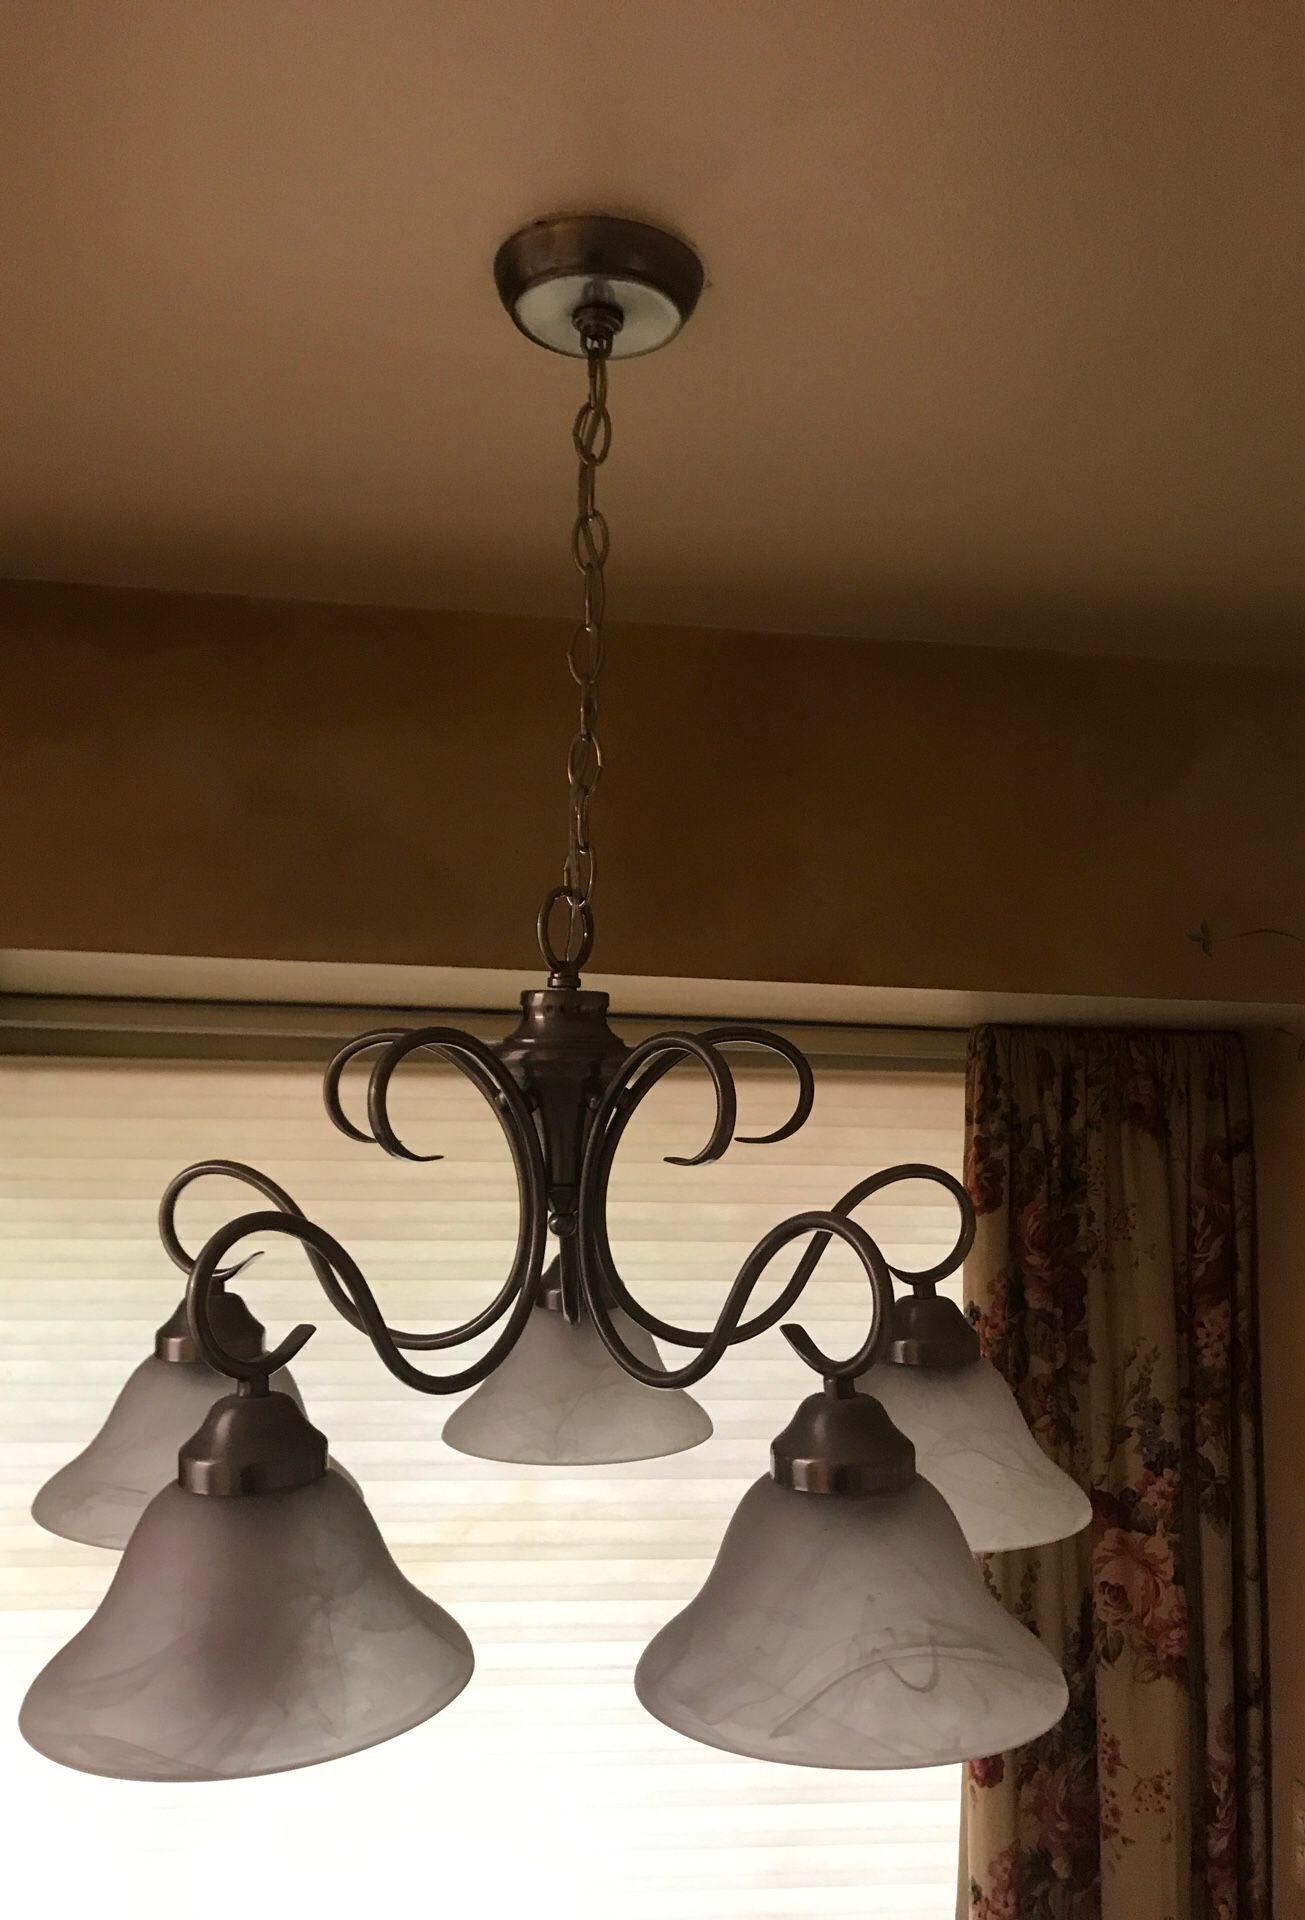 Glass shade chandelier